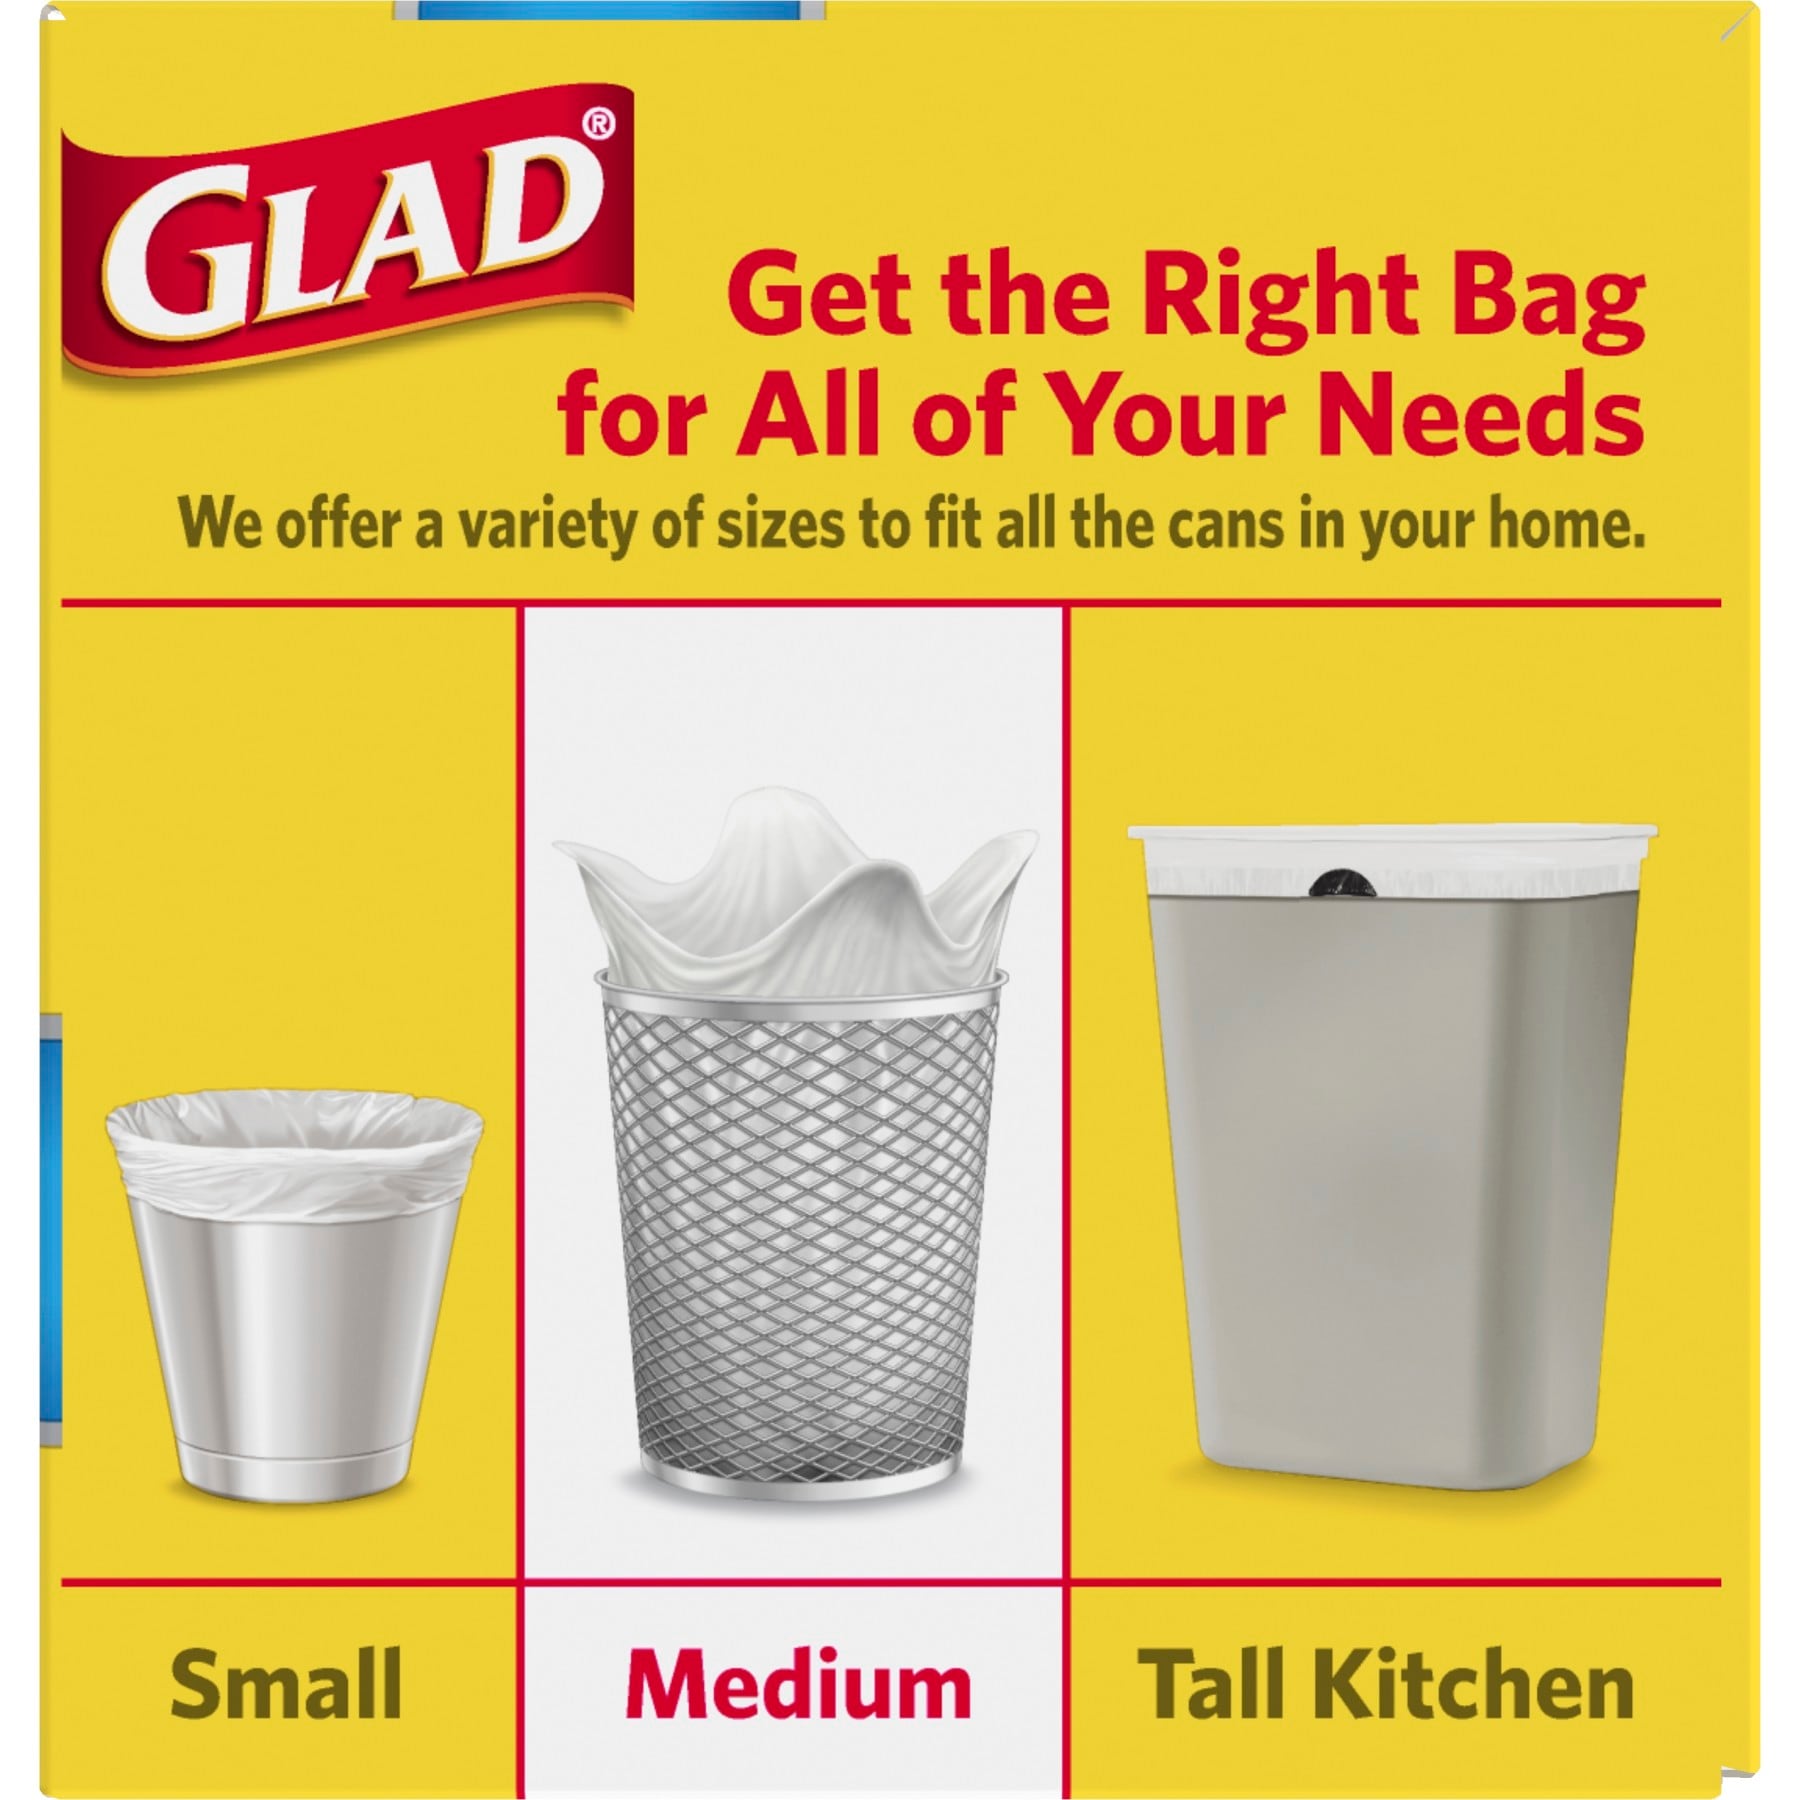 Glad Drawstring Medium Trash Bags - Fresh Clean - 8 Gallon - 80ct